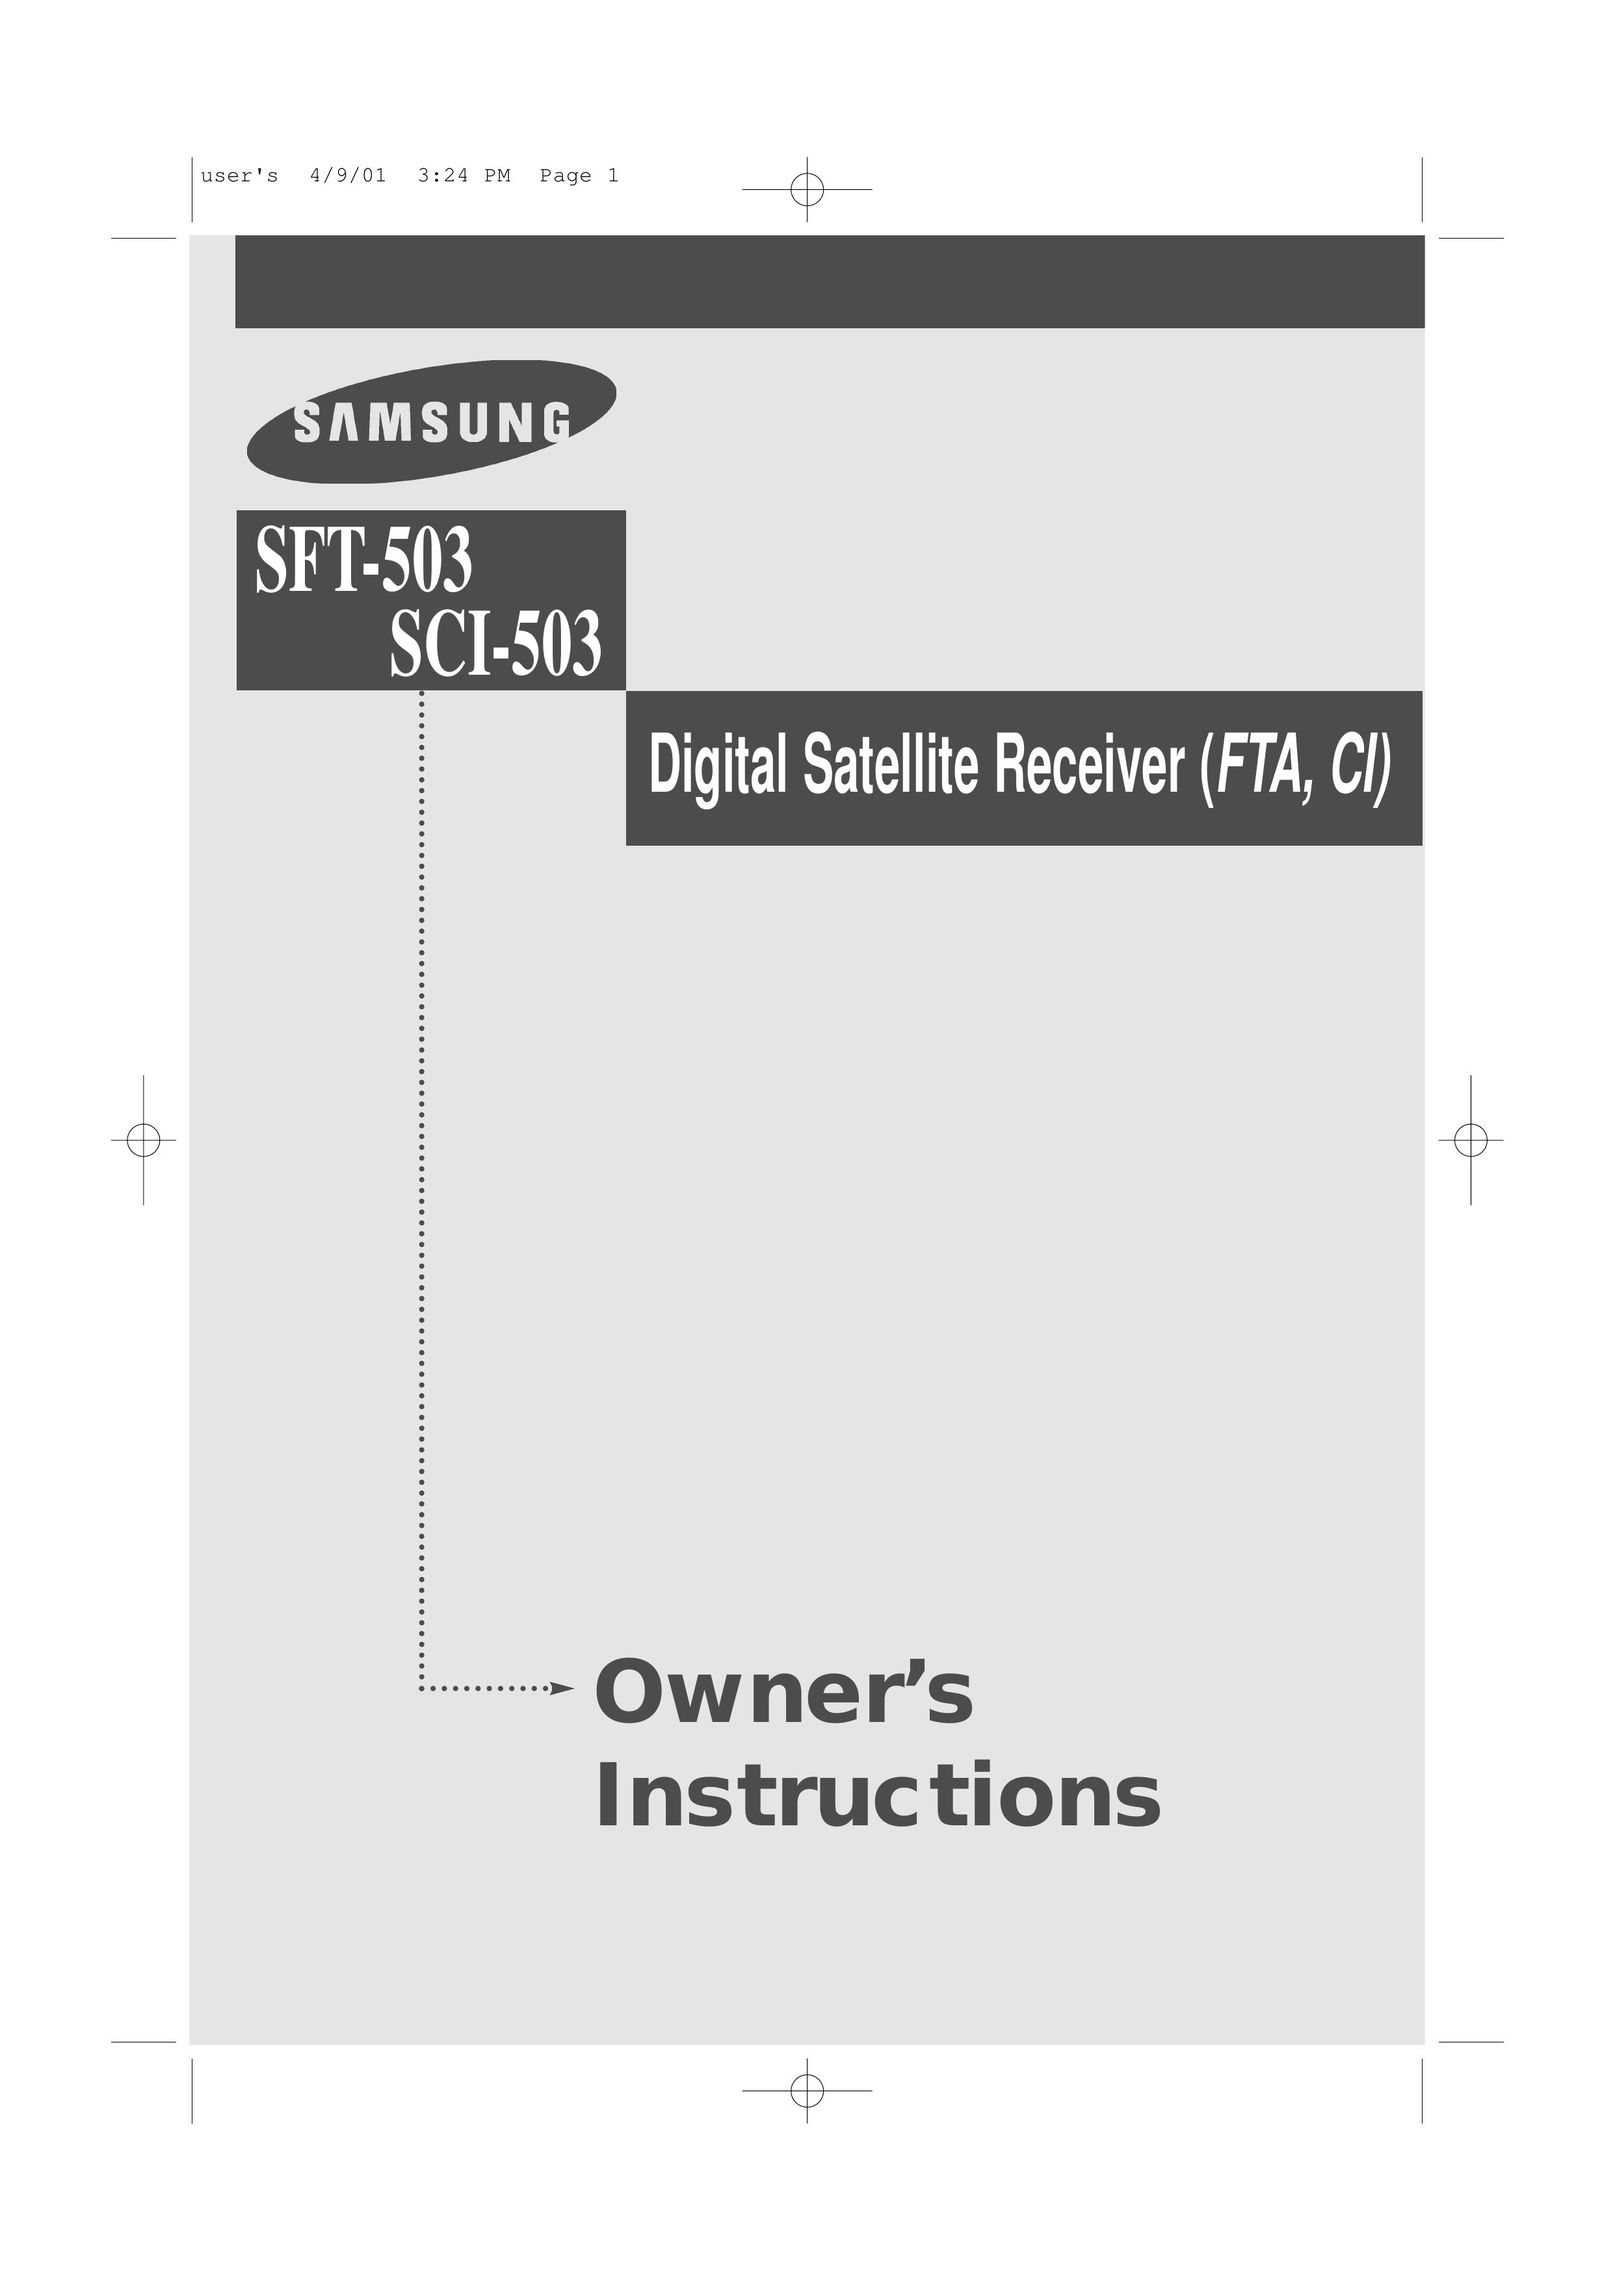 Samsung SFT-503 Satellite TV System User Manual